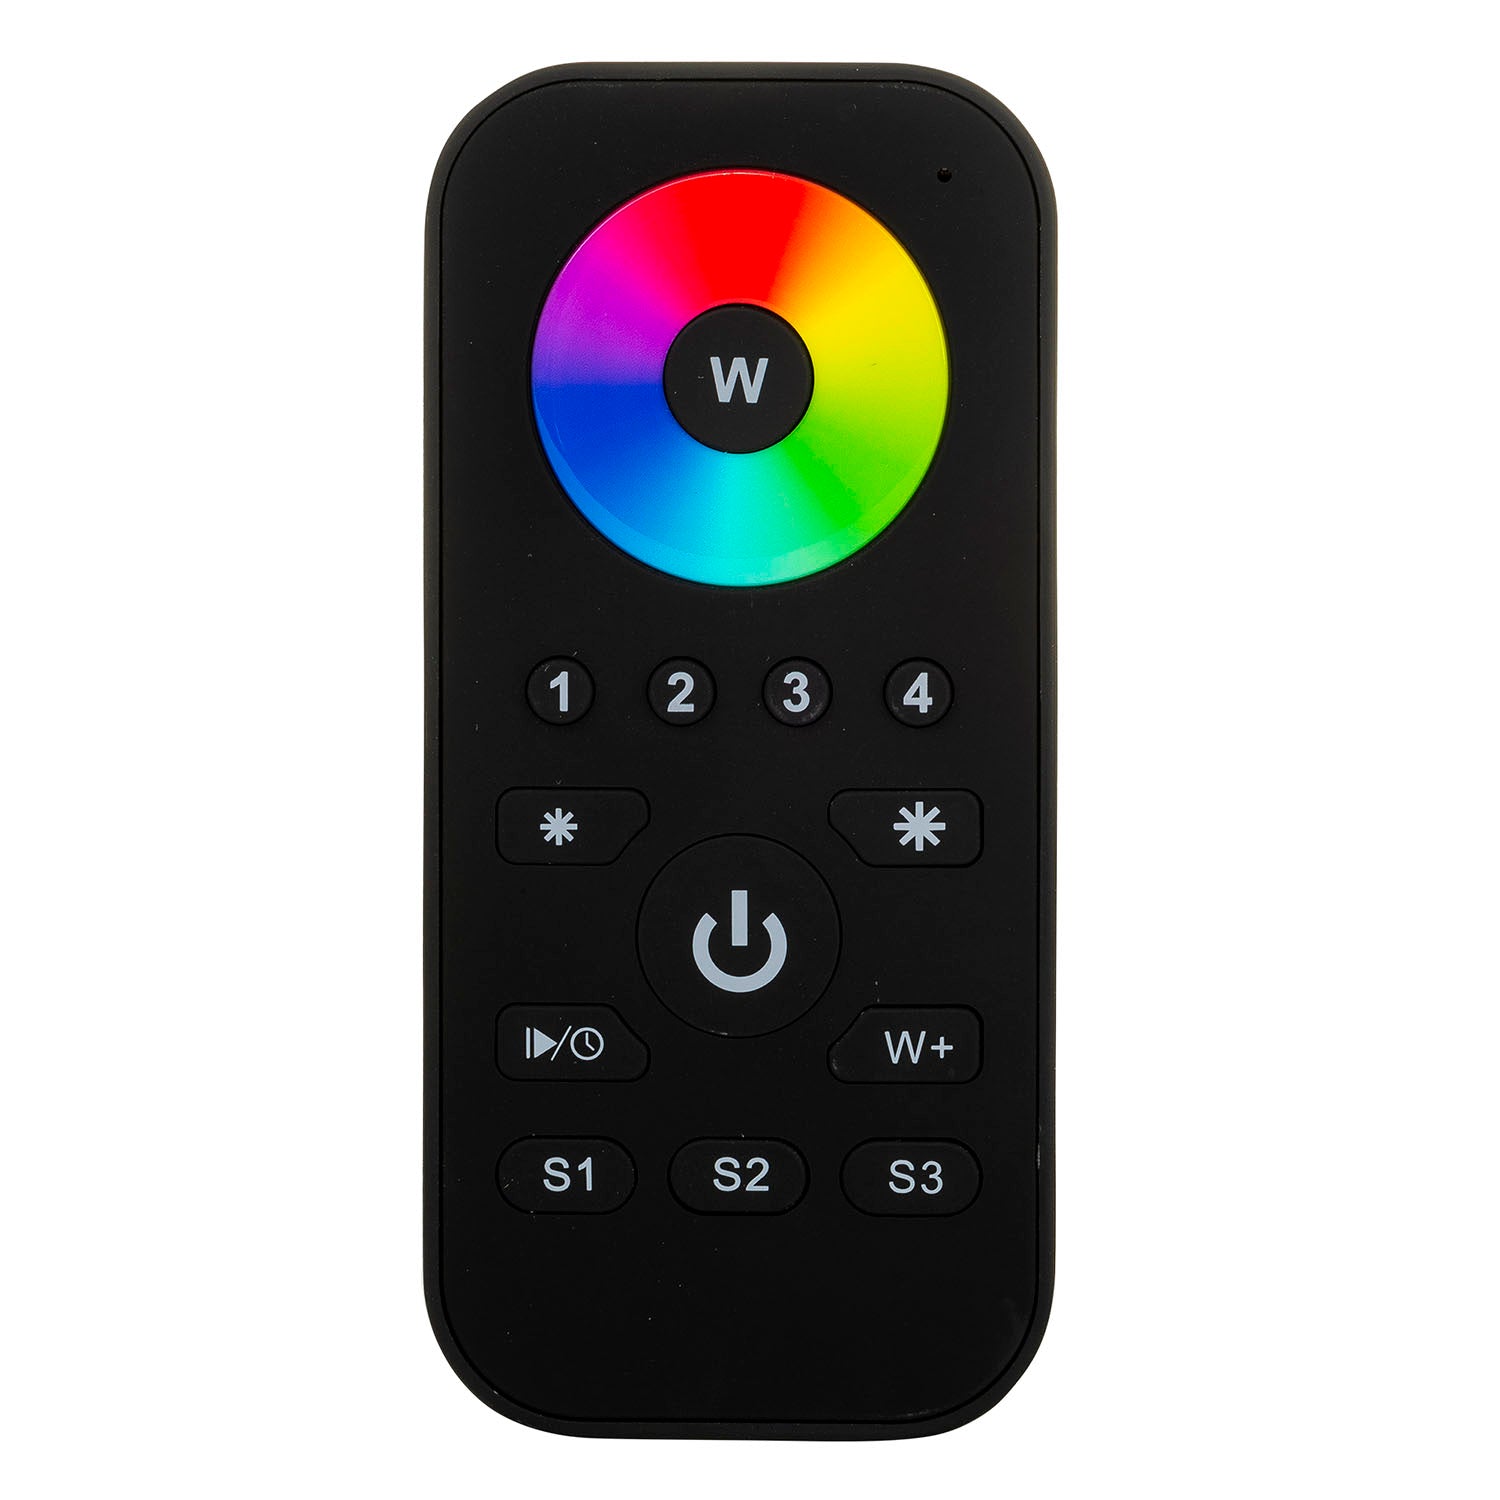 HV9102-ZB-RGBWREM - RGBW Zigbee LED Remote Controller